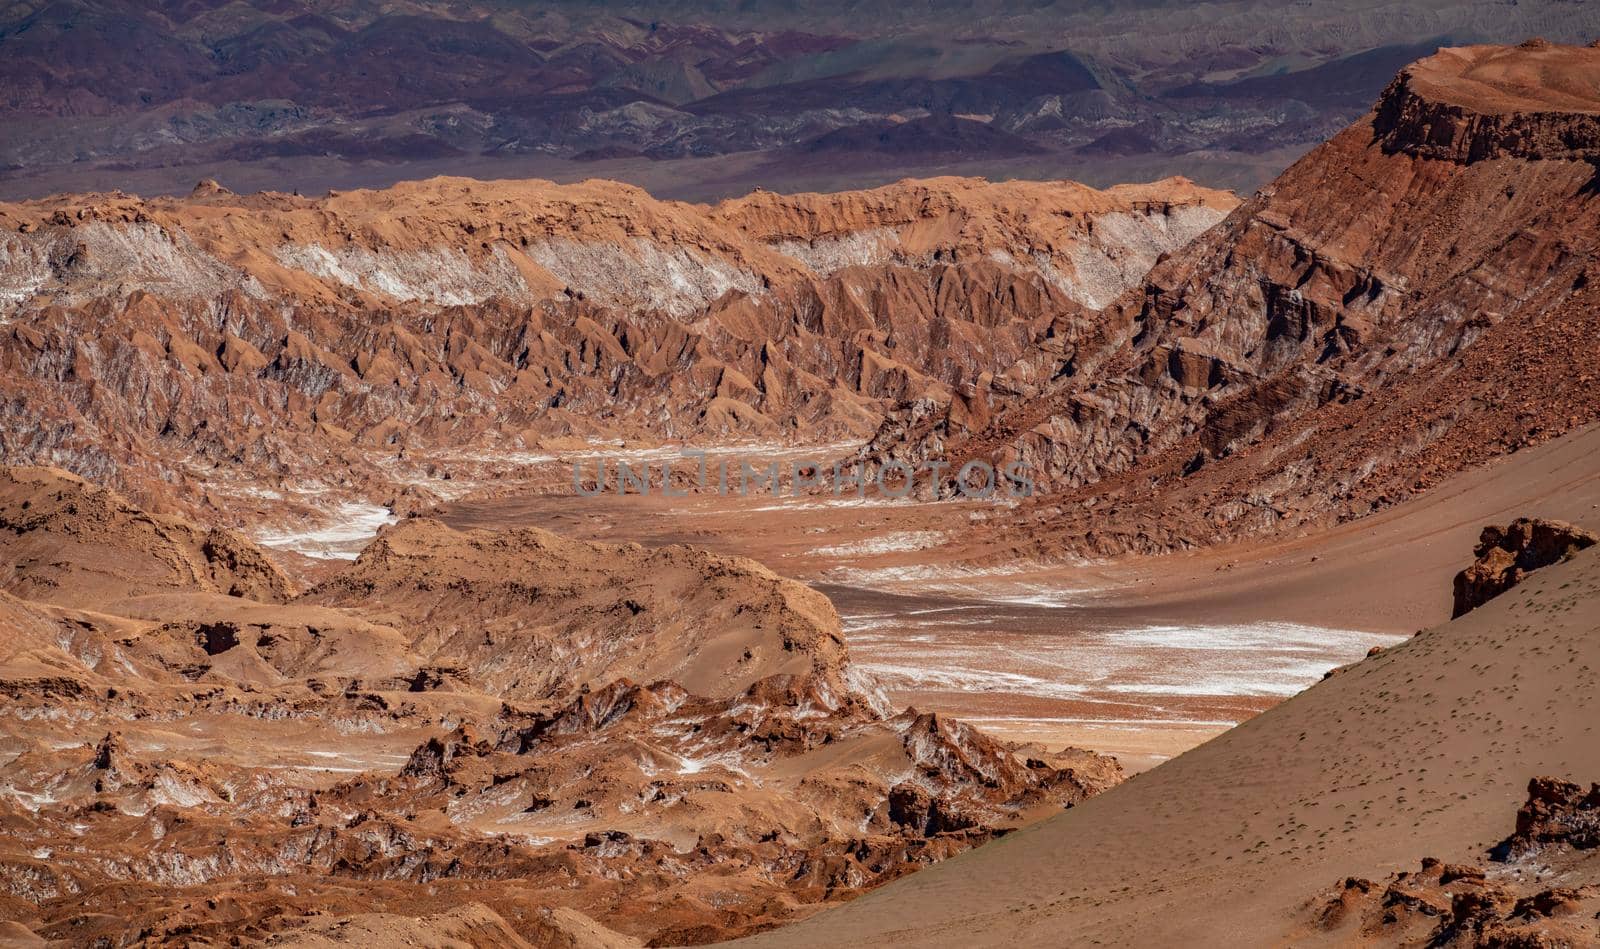 The absolutely dry terrain of moon valley in Atacama